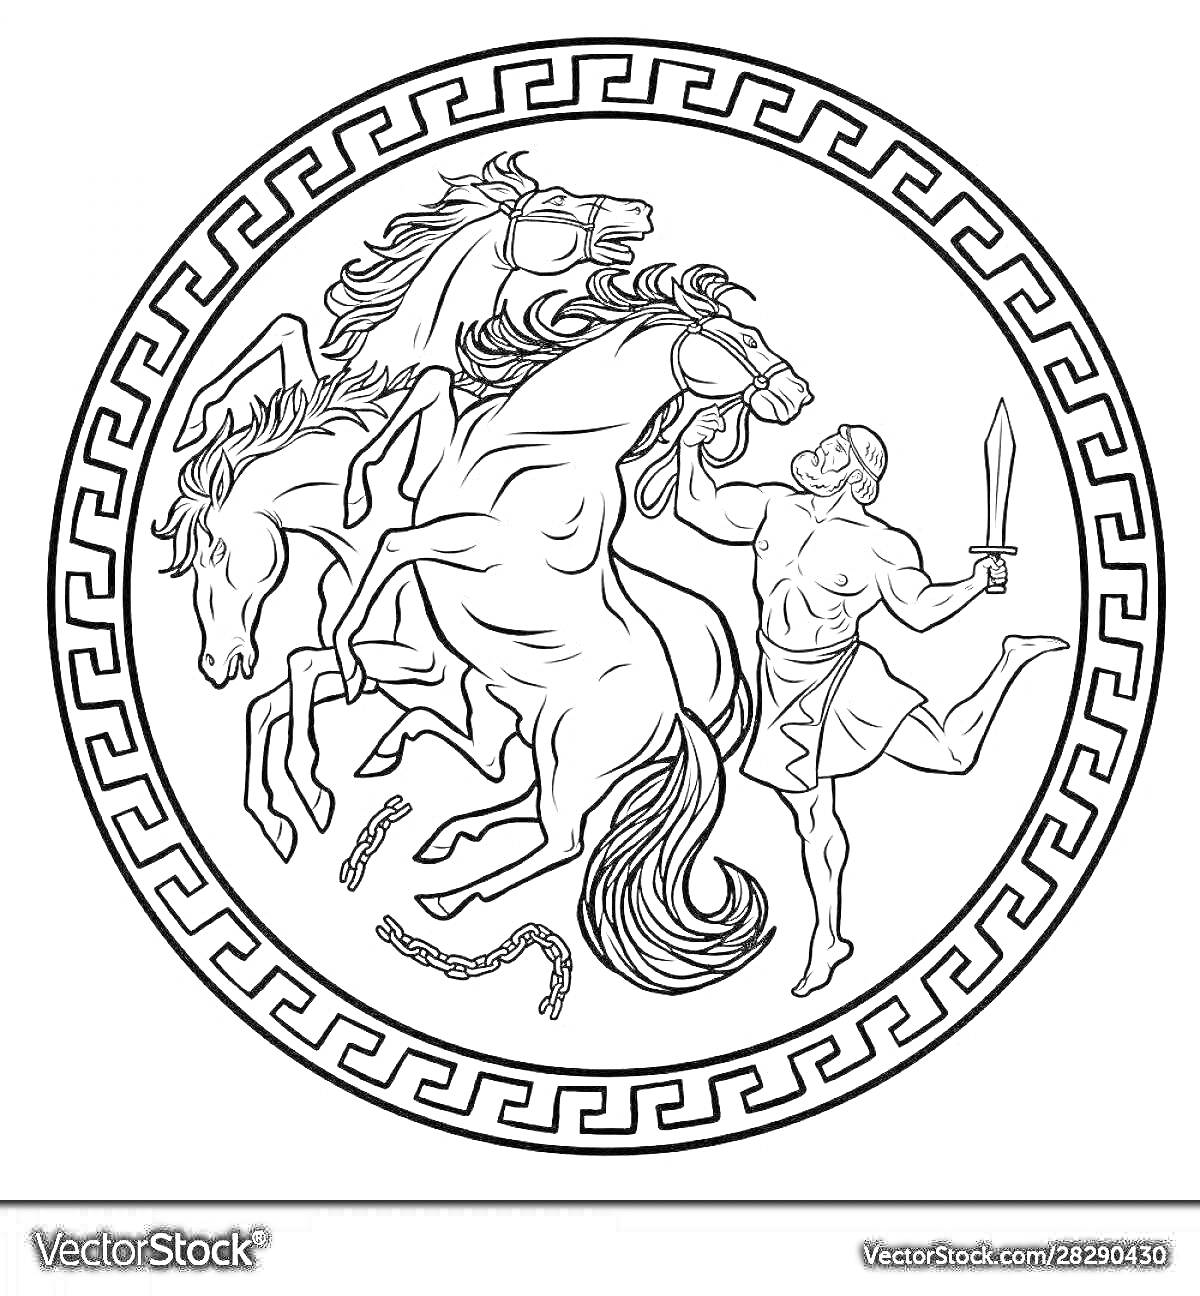 На раскраске изображено: Геракл, Меч, Орнамент, Античная мифология, Древняя Греция, Подвиг